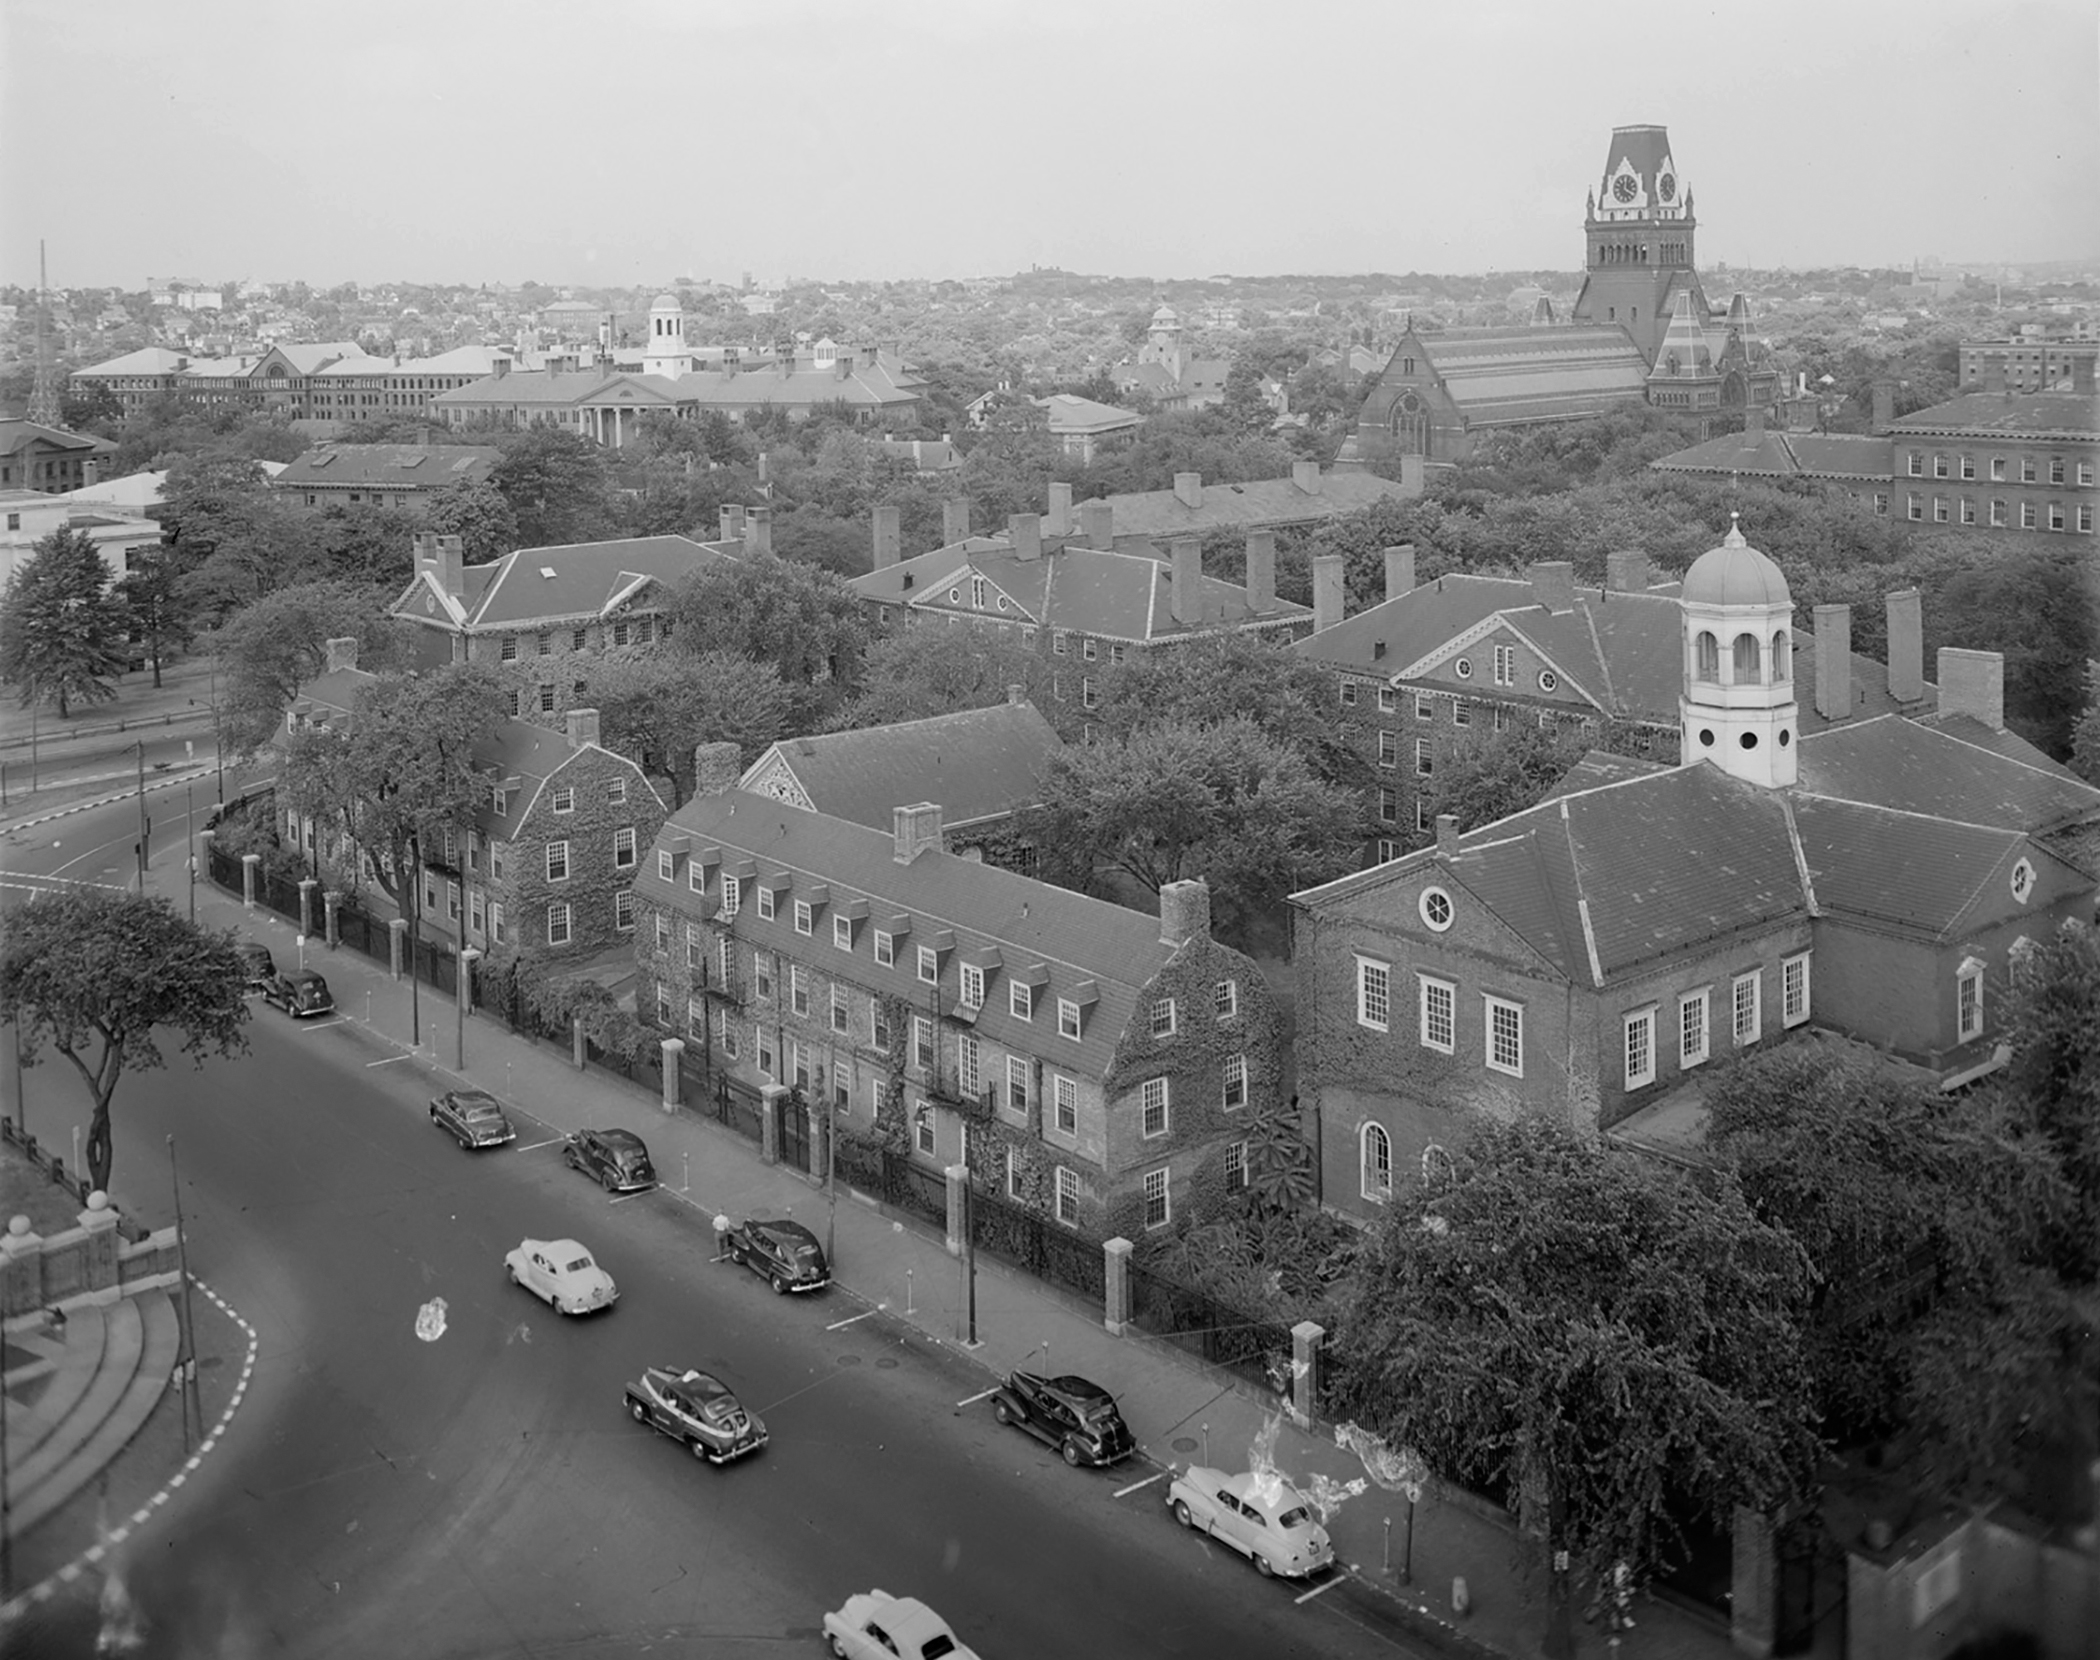 Bird's eye view of Harvard campus, ca. 1950s